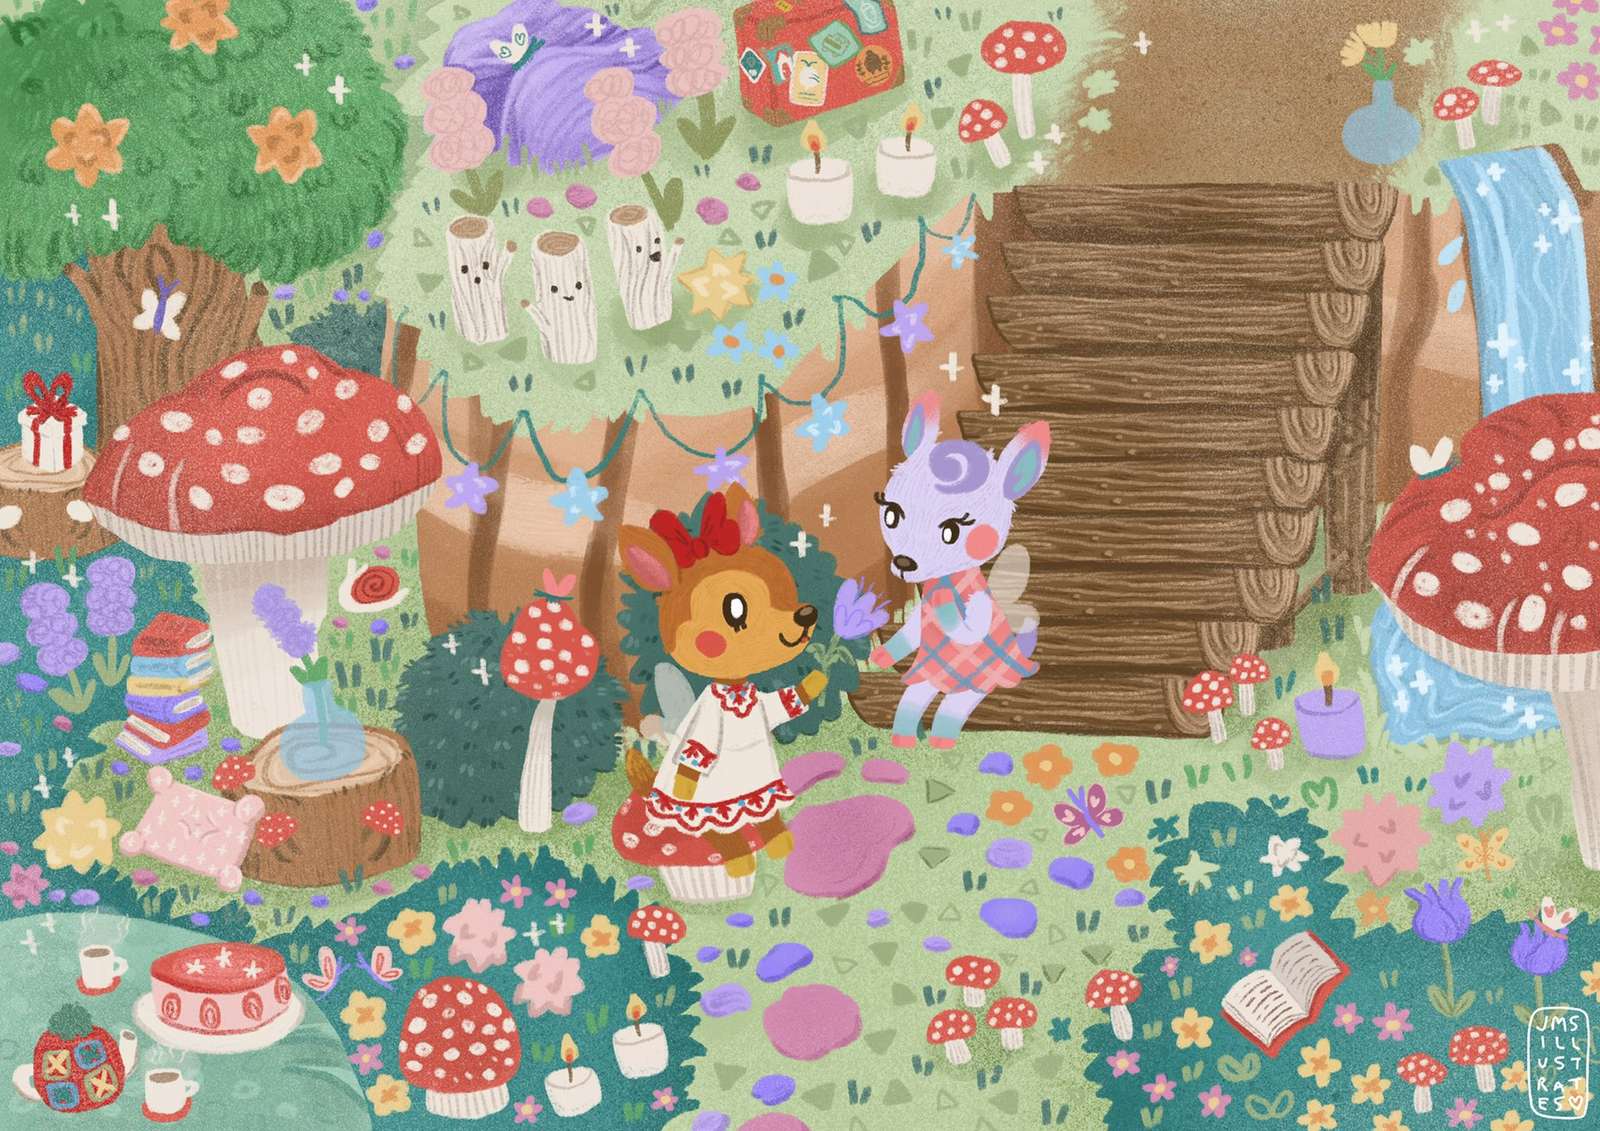 Fauna e Diana Art (Animal Crossing New Horizon) puzzle online a partir de fotografia